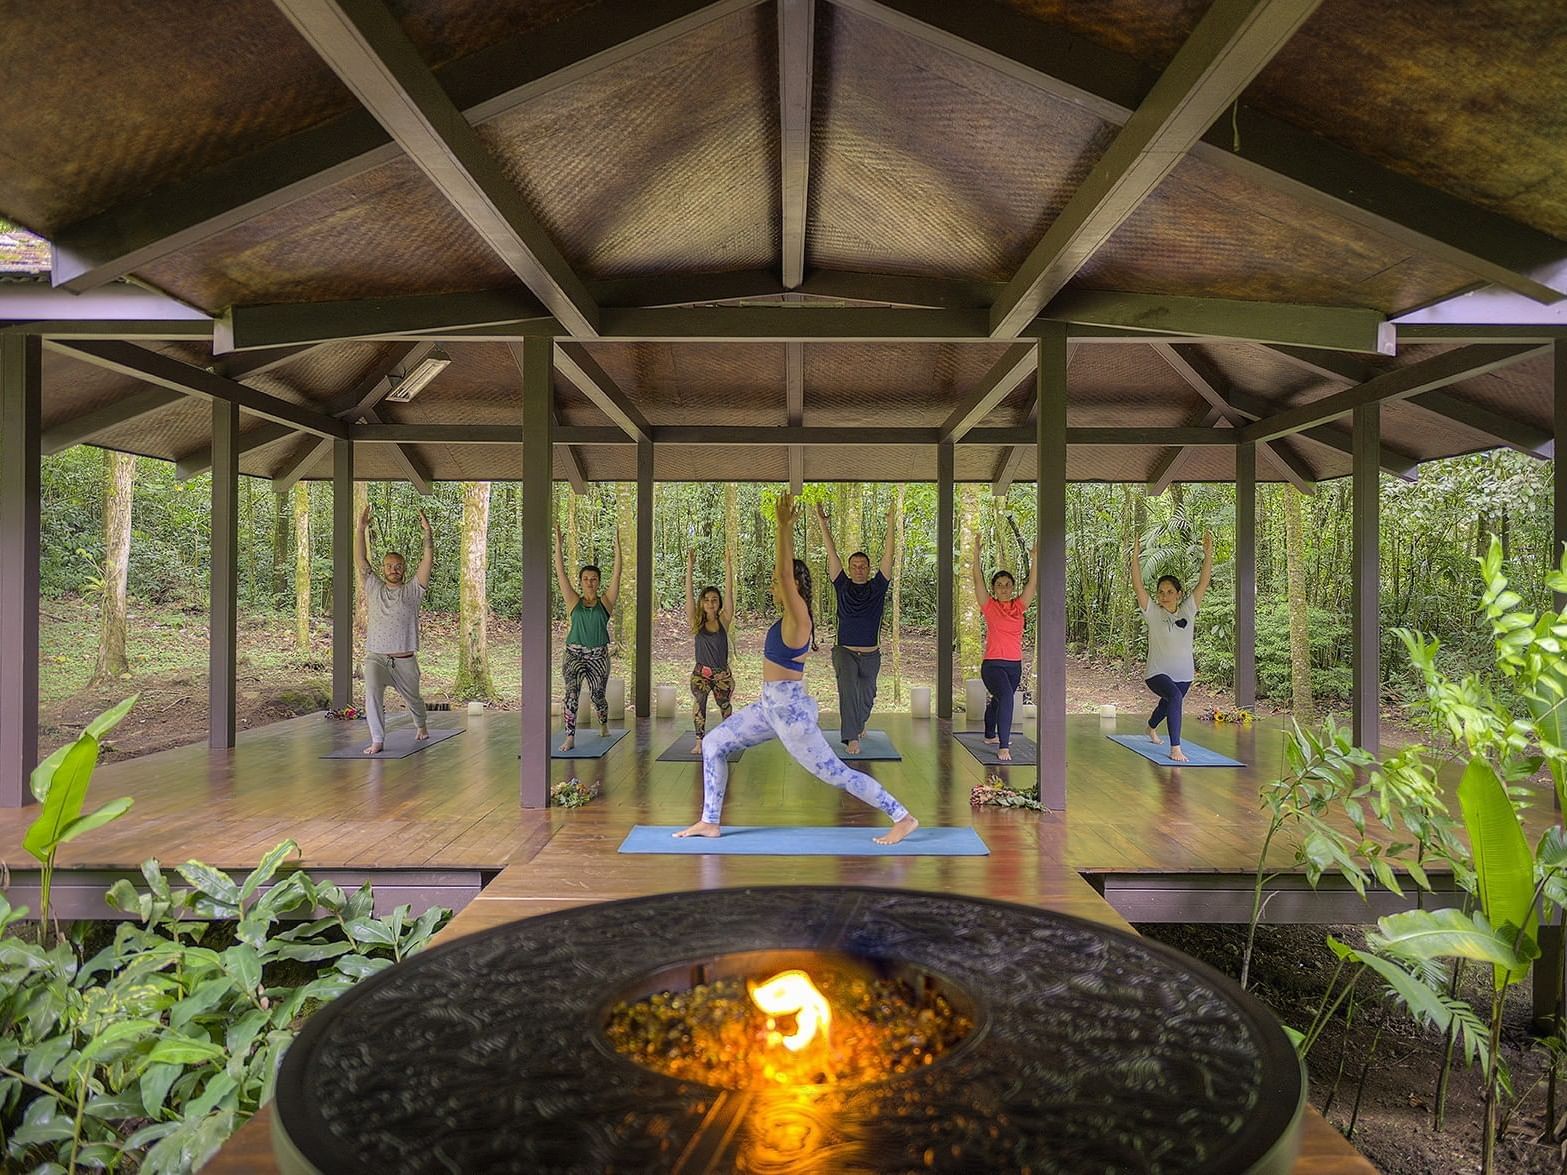 group of people practicing yoga in outdoor studio